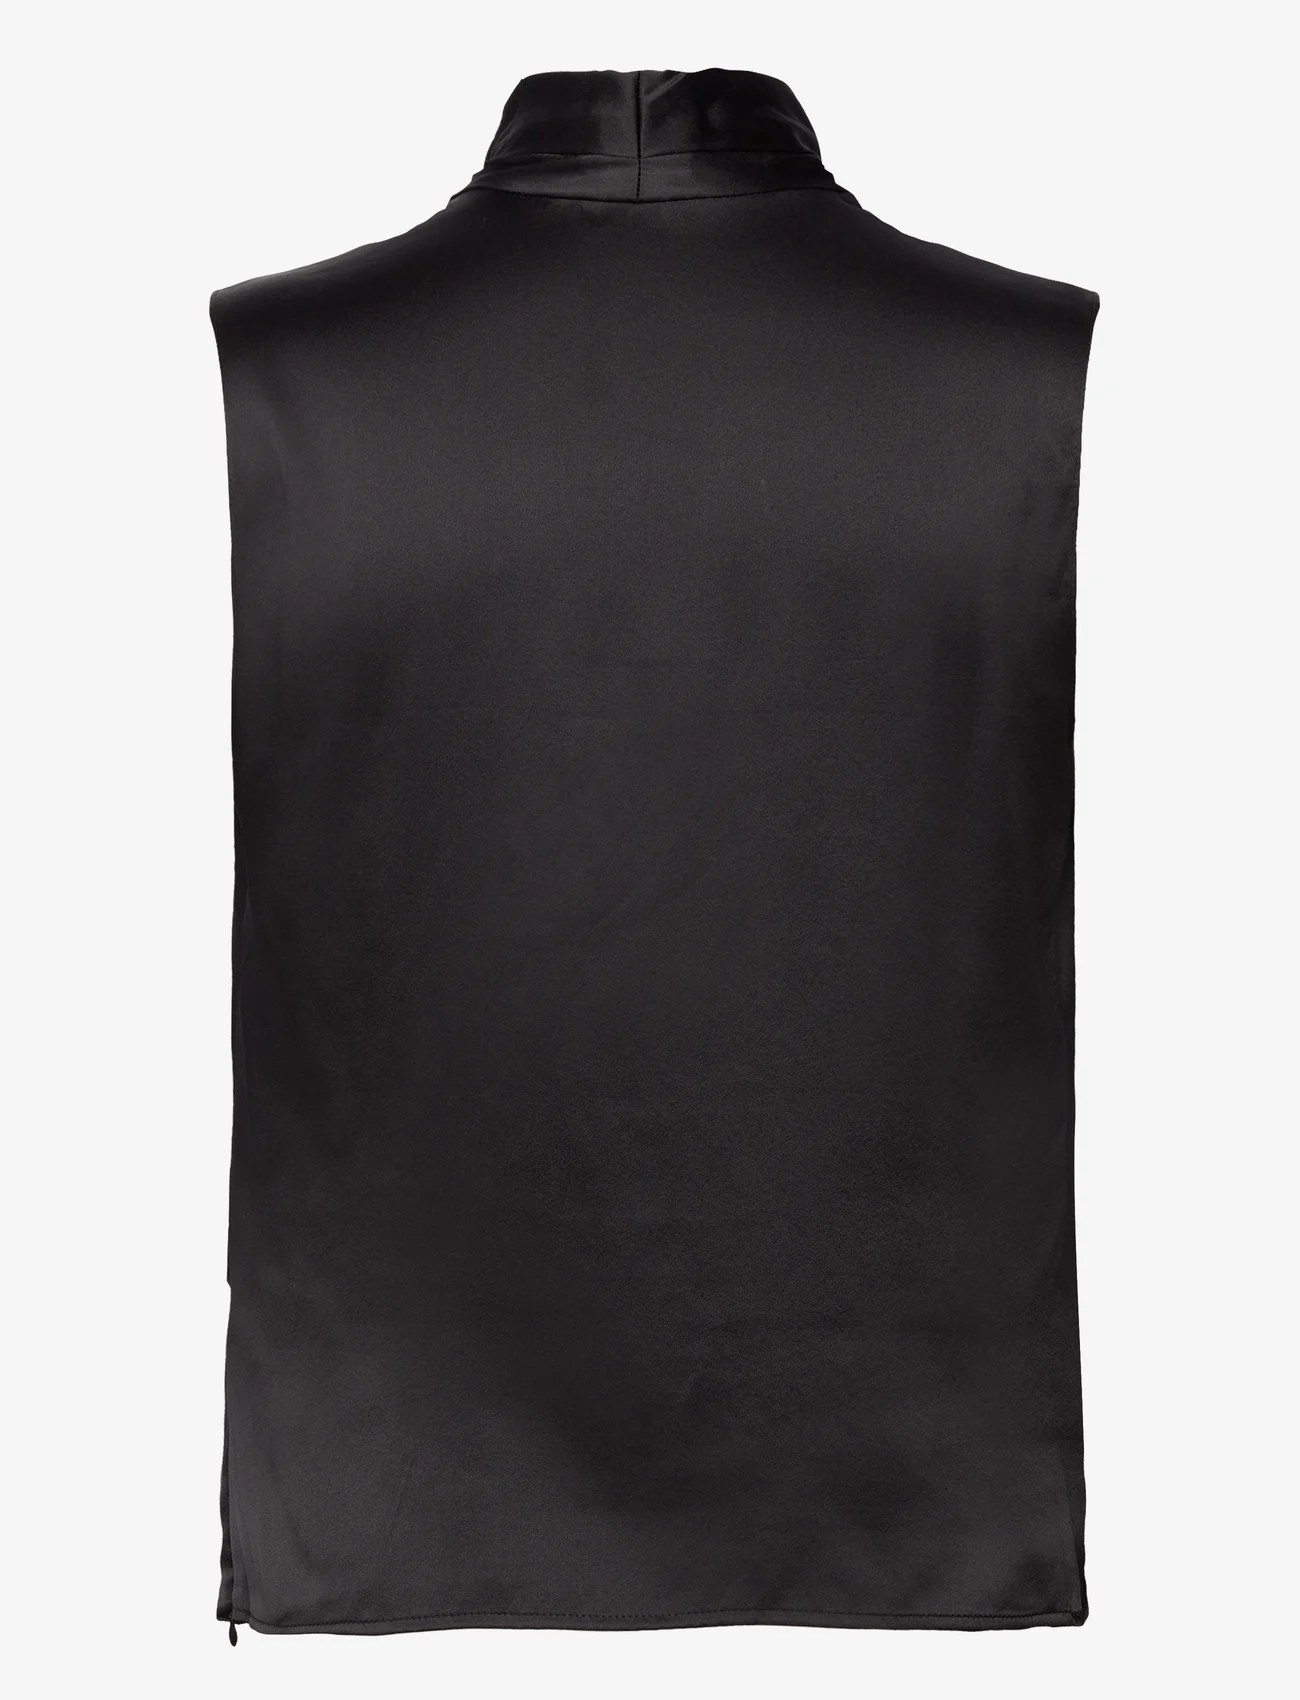 Andiata - Elous top - sleeveless blouses - black - 1